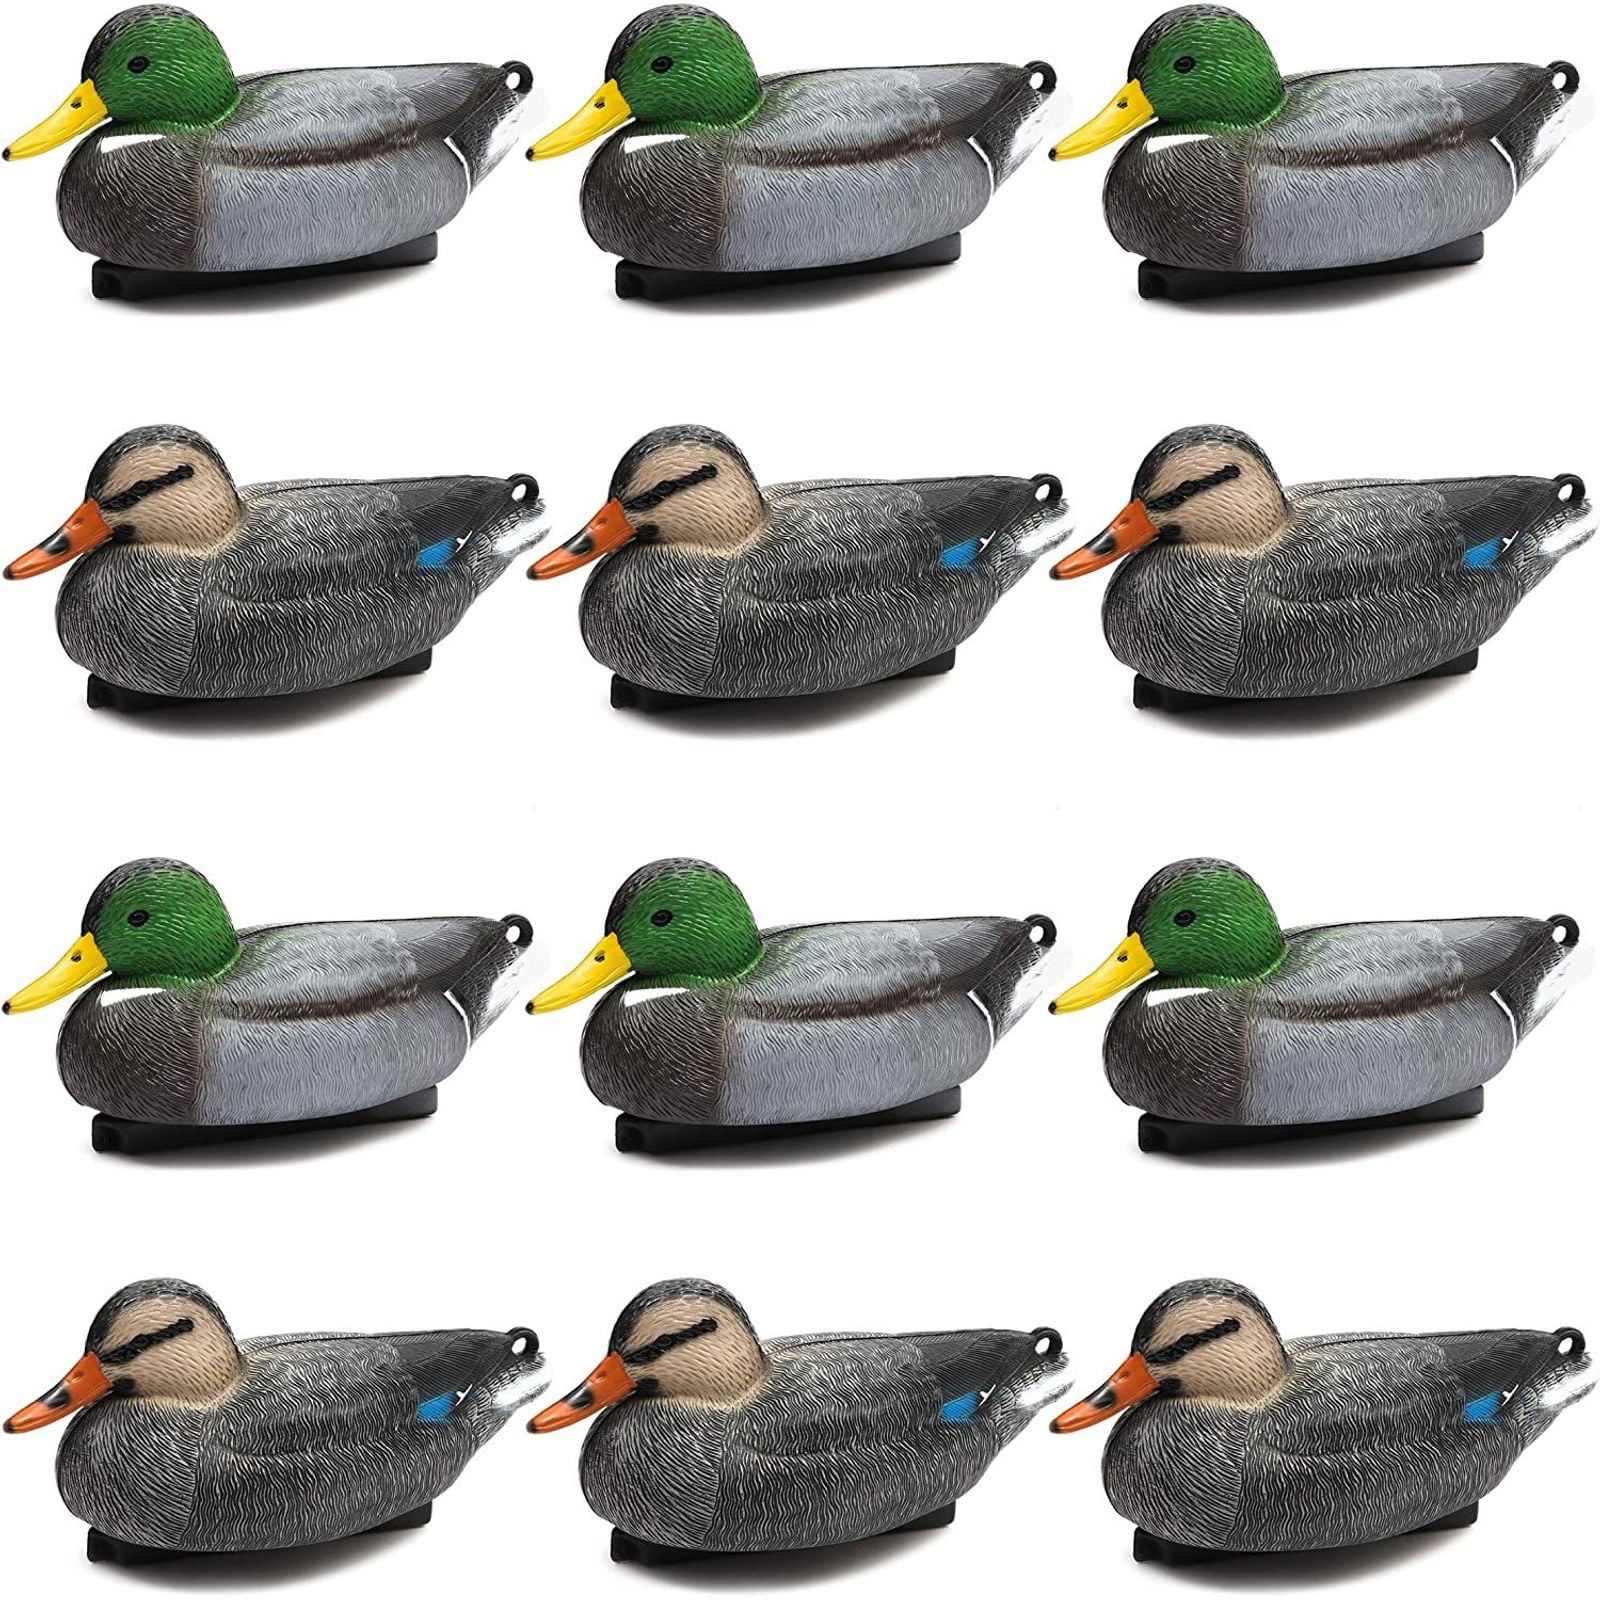 5 Pack Baby Ducking Floating Decoy Ducks Mallard Plastic Ornament Pond 